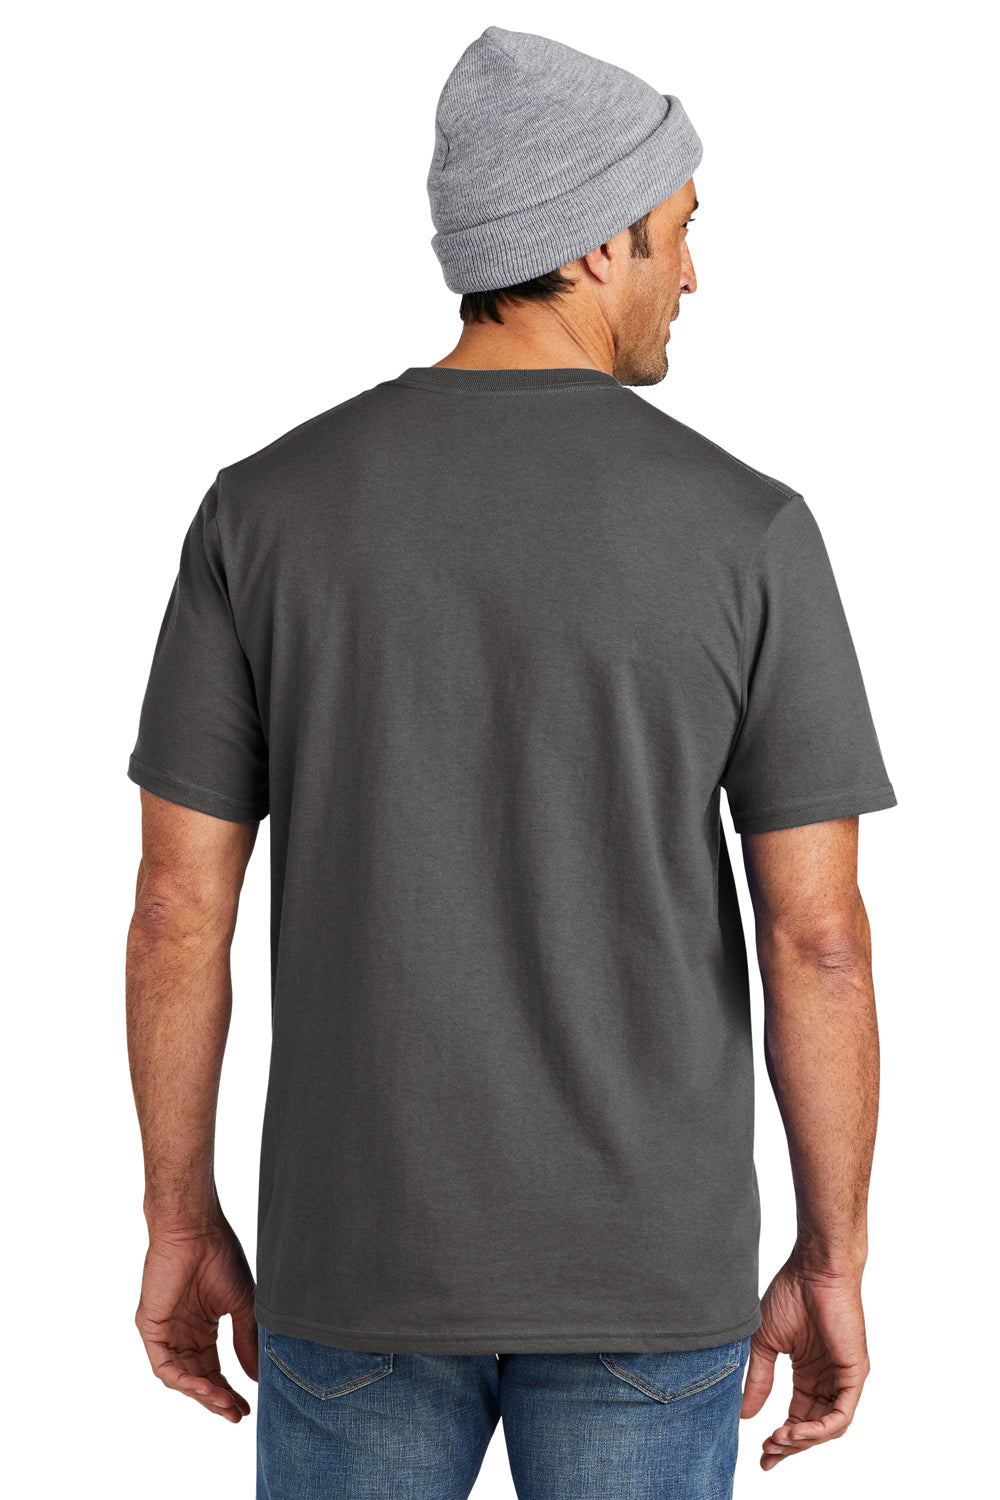 Volunteer Knitwear VL100P USA Made All American Short Sleeve Crewneck T-Shirt w/ Pocket Steel Grey Back